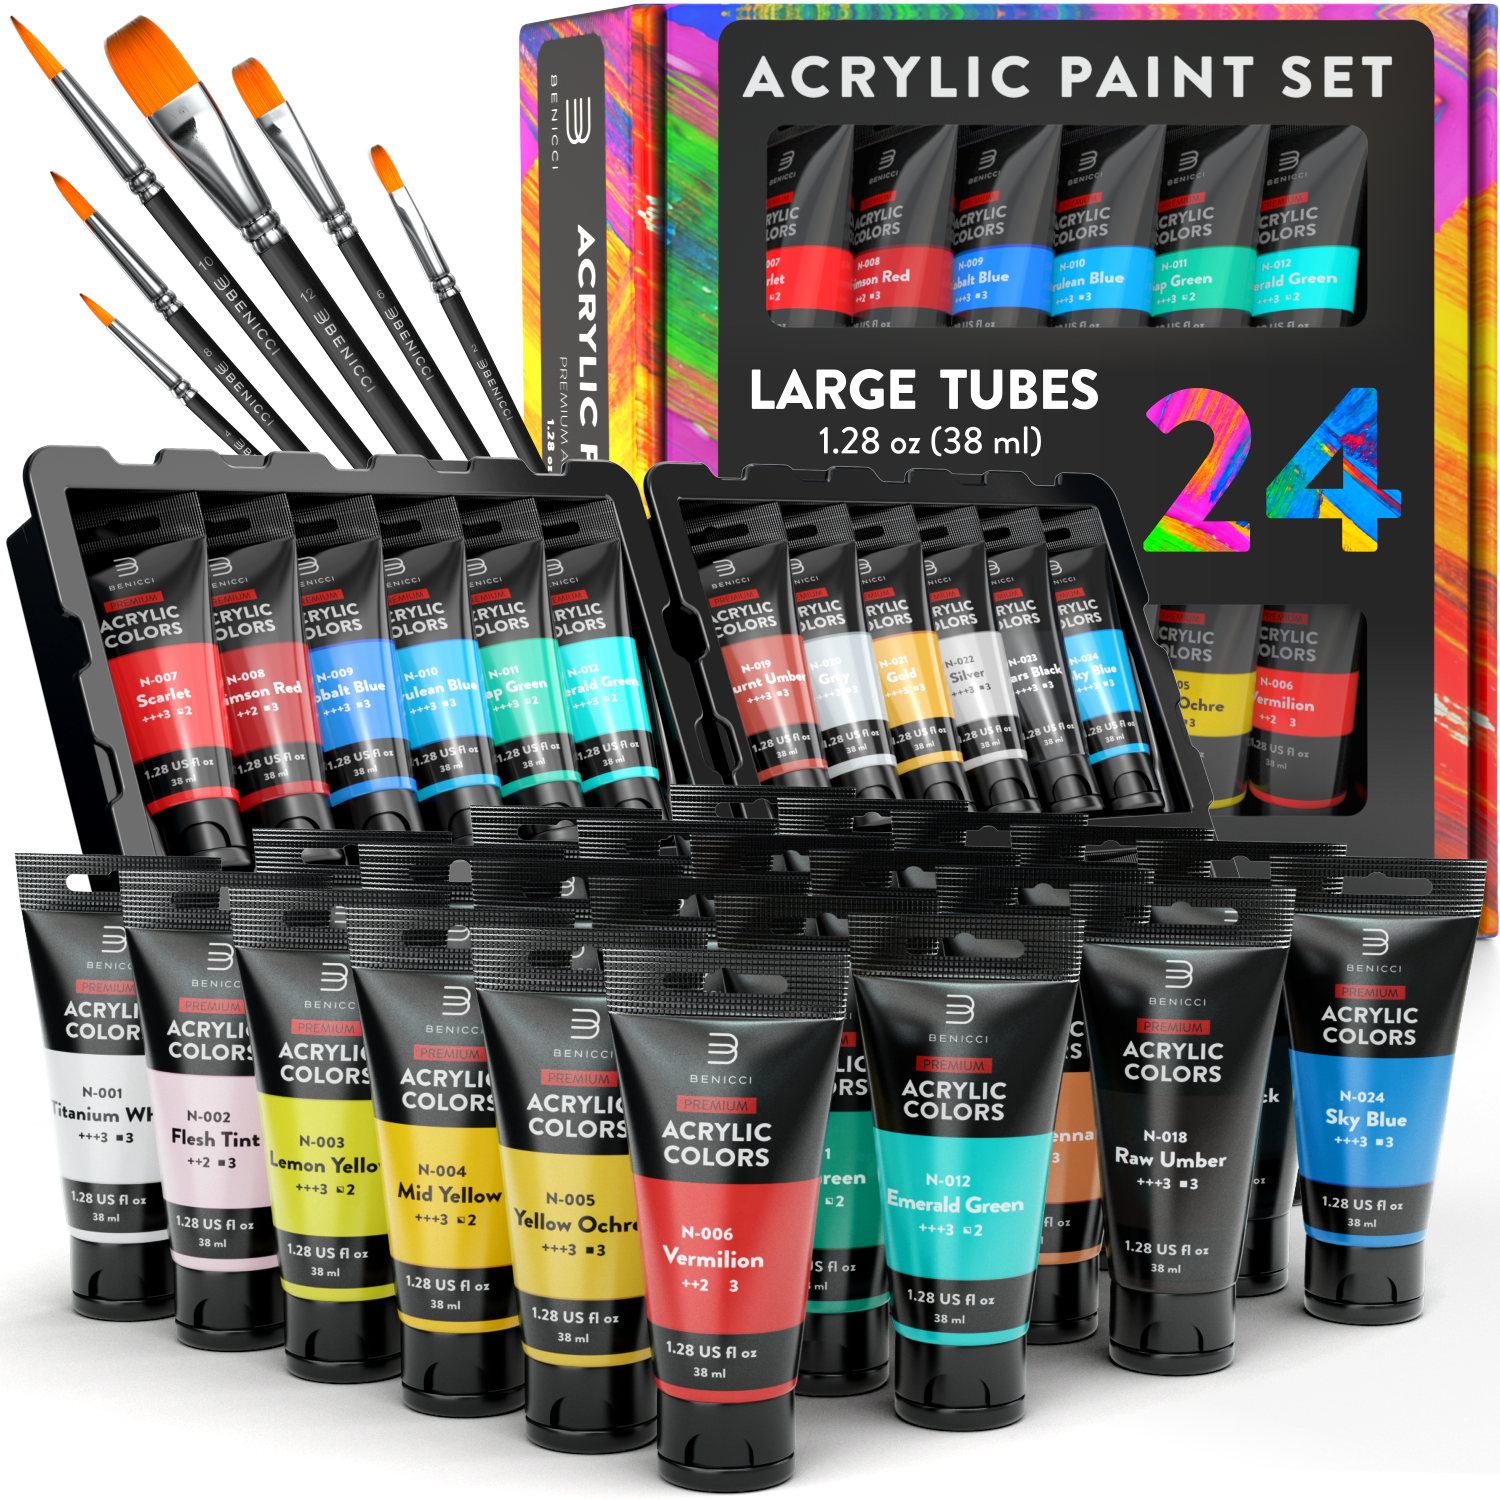 Acrylic Paint Set, 22ml Tubes - Set of 24 - Chalkola Art Supply